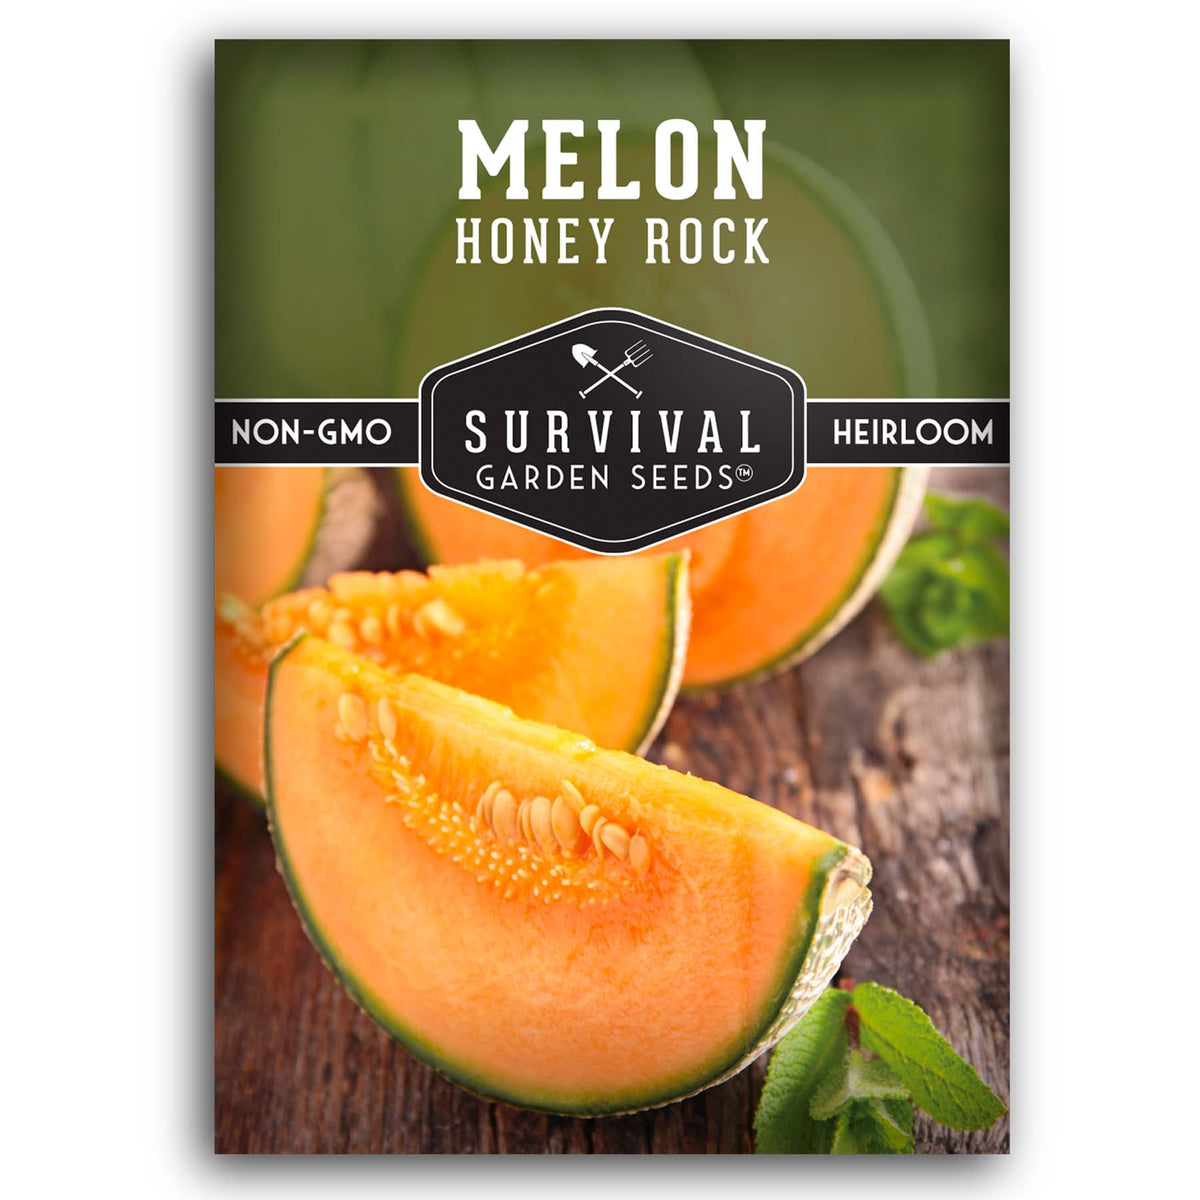 Honey Rock Melon seeds for planting